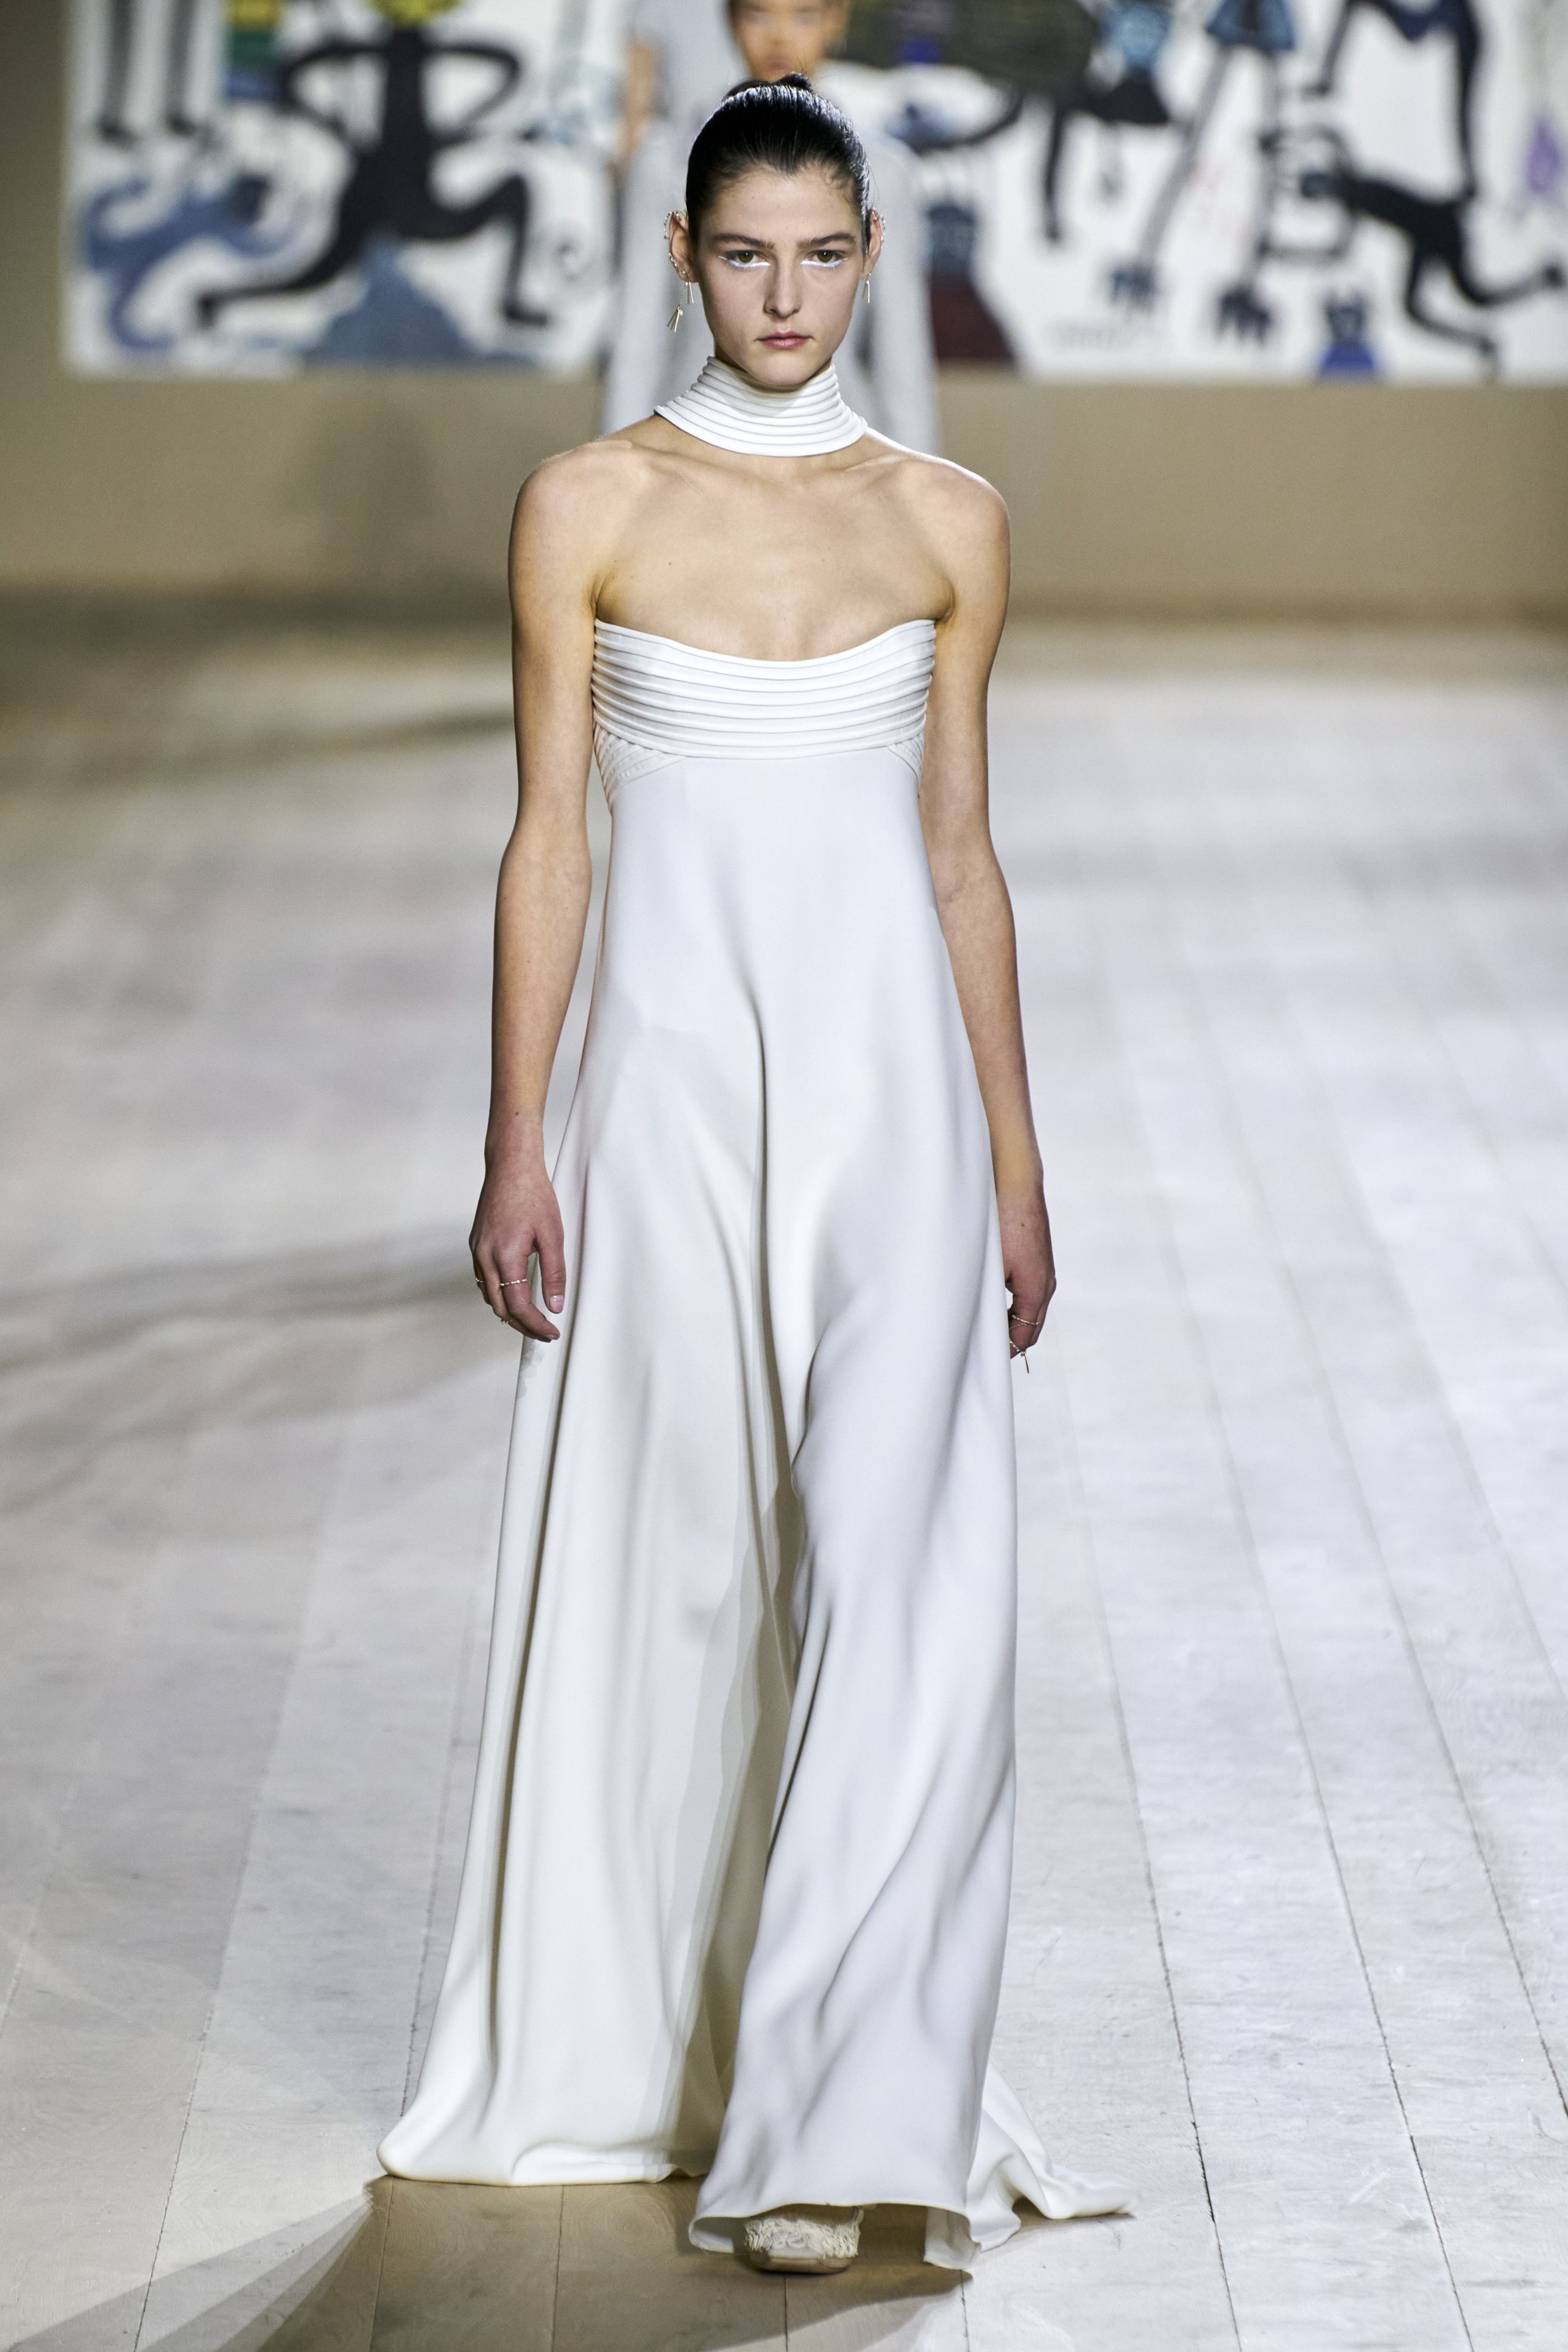 Calvin Klein Wedding Dresses - Home Design Ideas